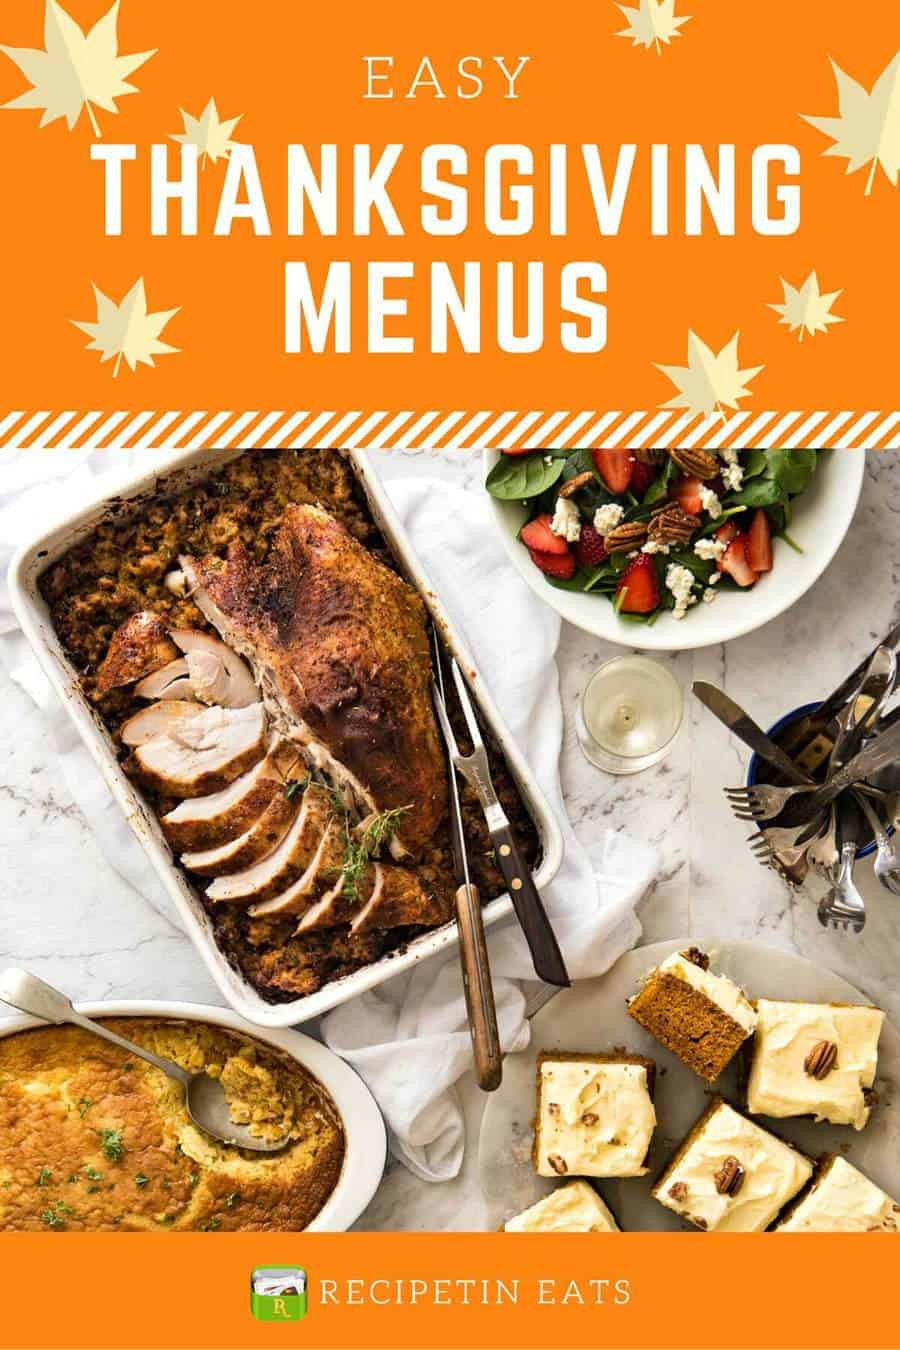 Food Network Thanksgiving Menu
 Food Network Thanksgiving Recipes Top 10